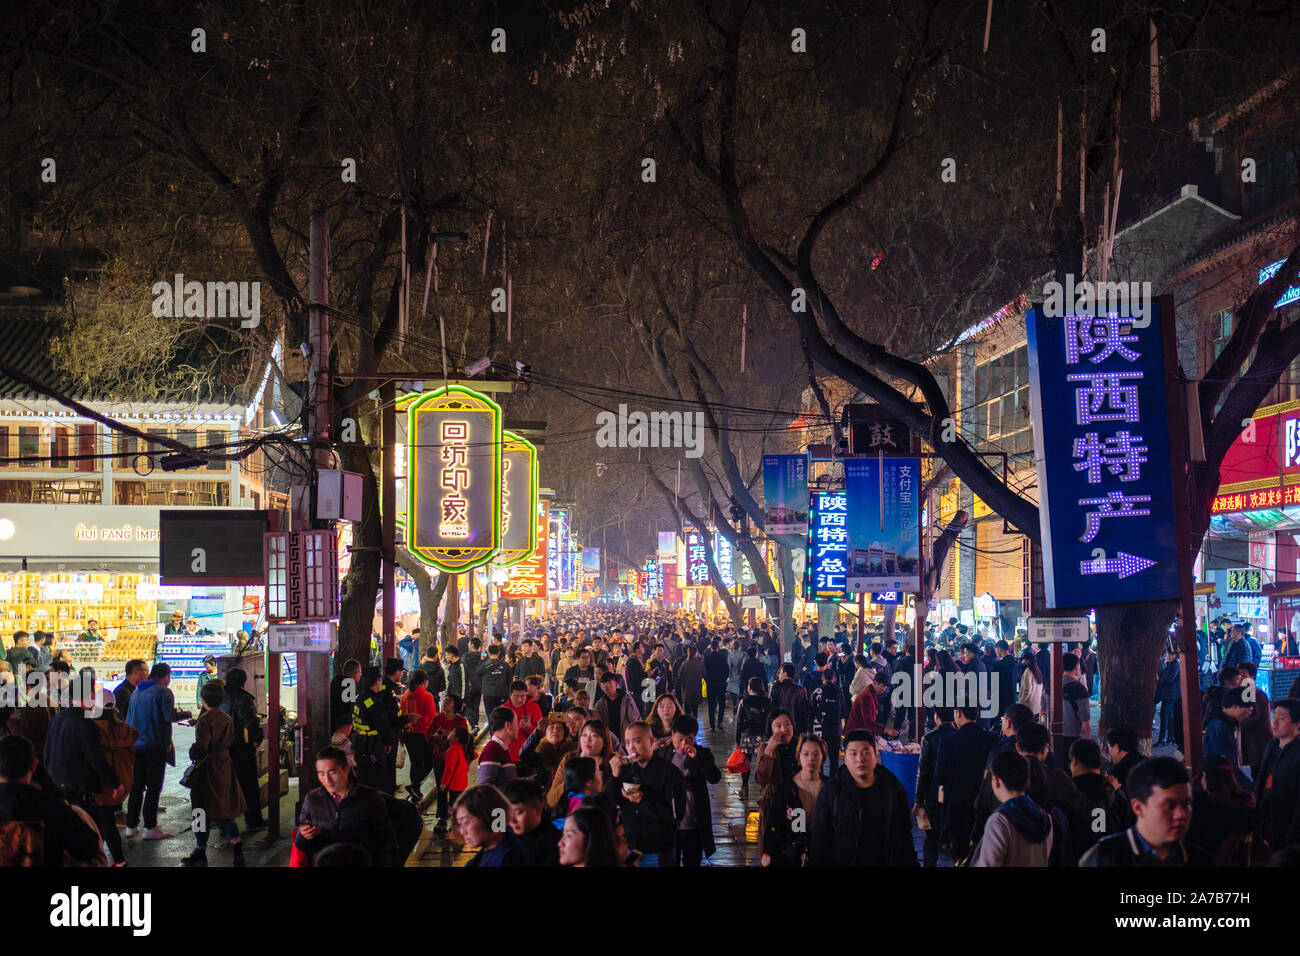 Muslim Street Illuminated at Night with People, Xian, Shaanxi Provence China Stock Photo